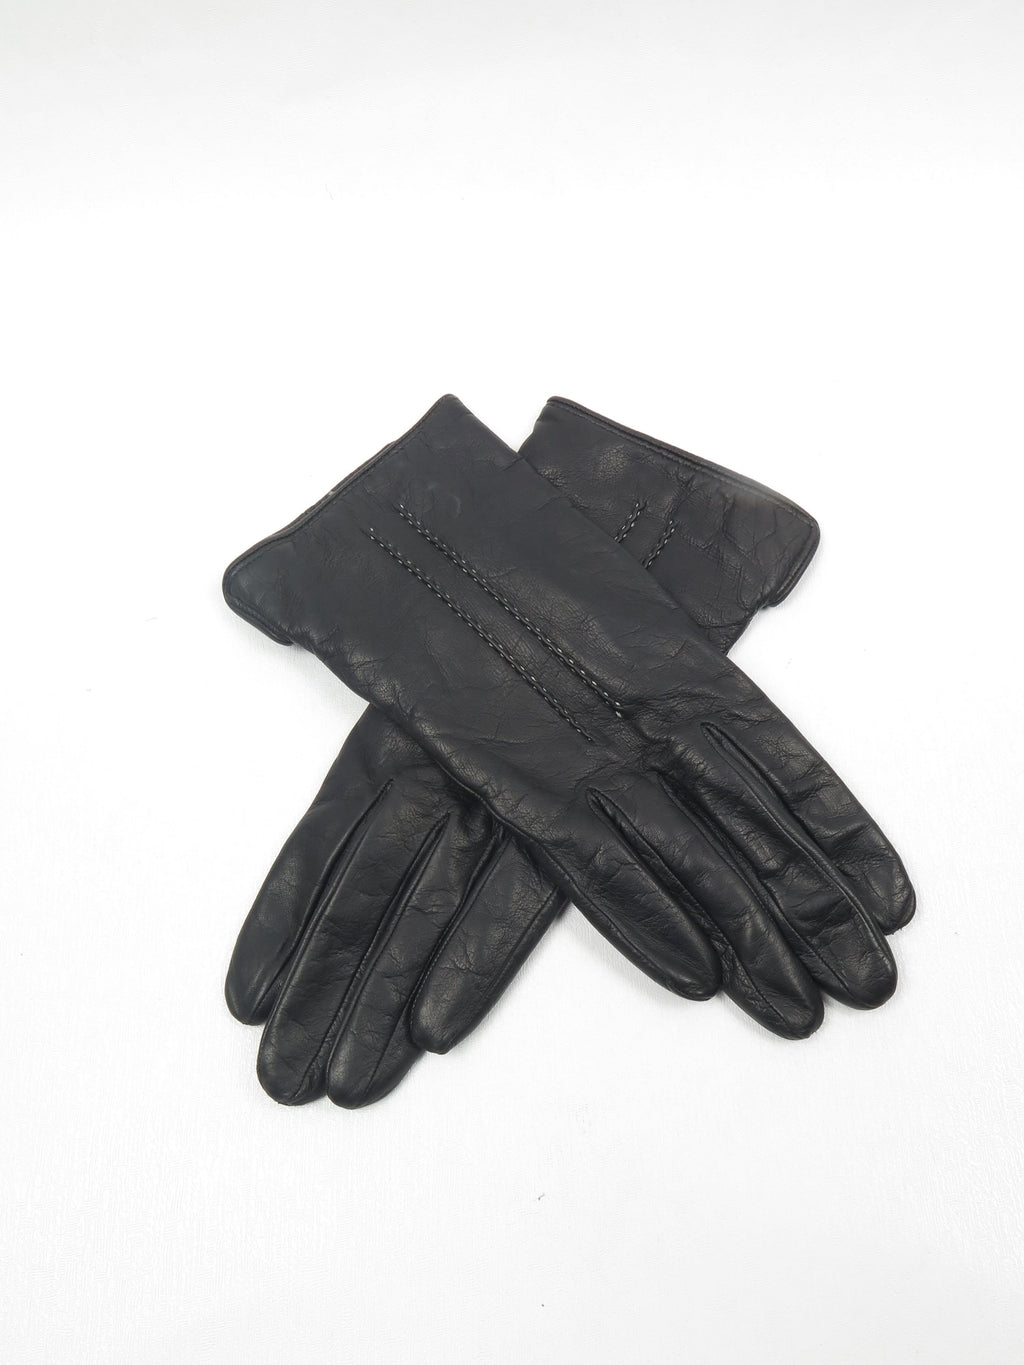 Women's Soft Leather Vintage Gloves Black S/M - The Harlequin